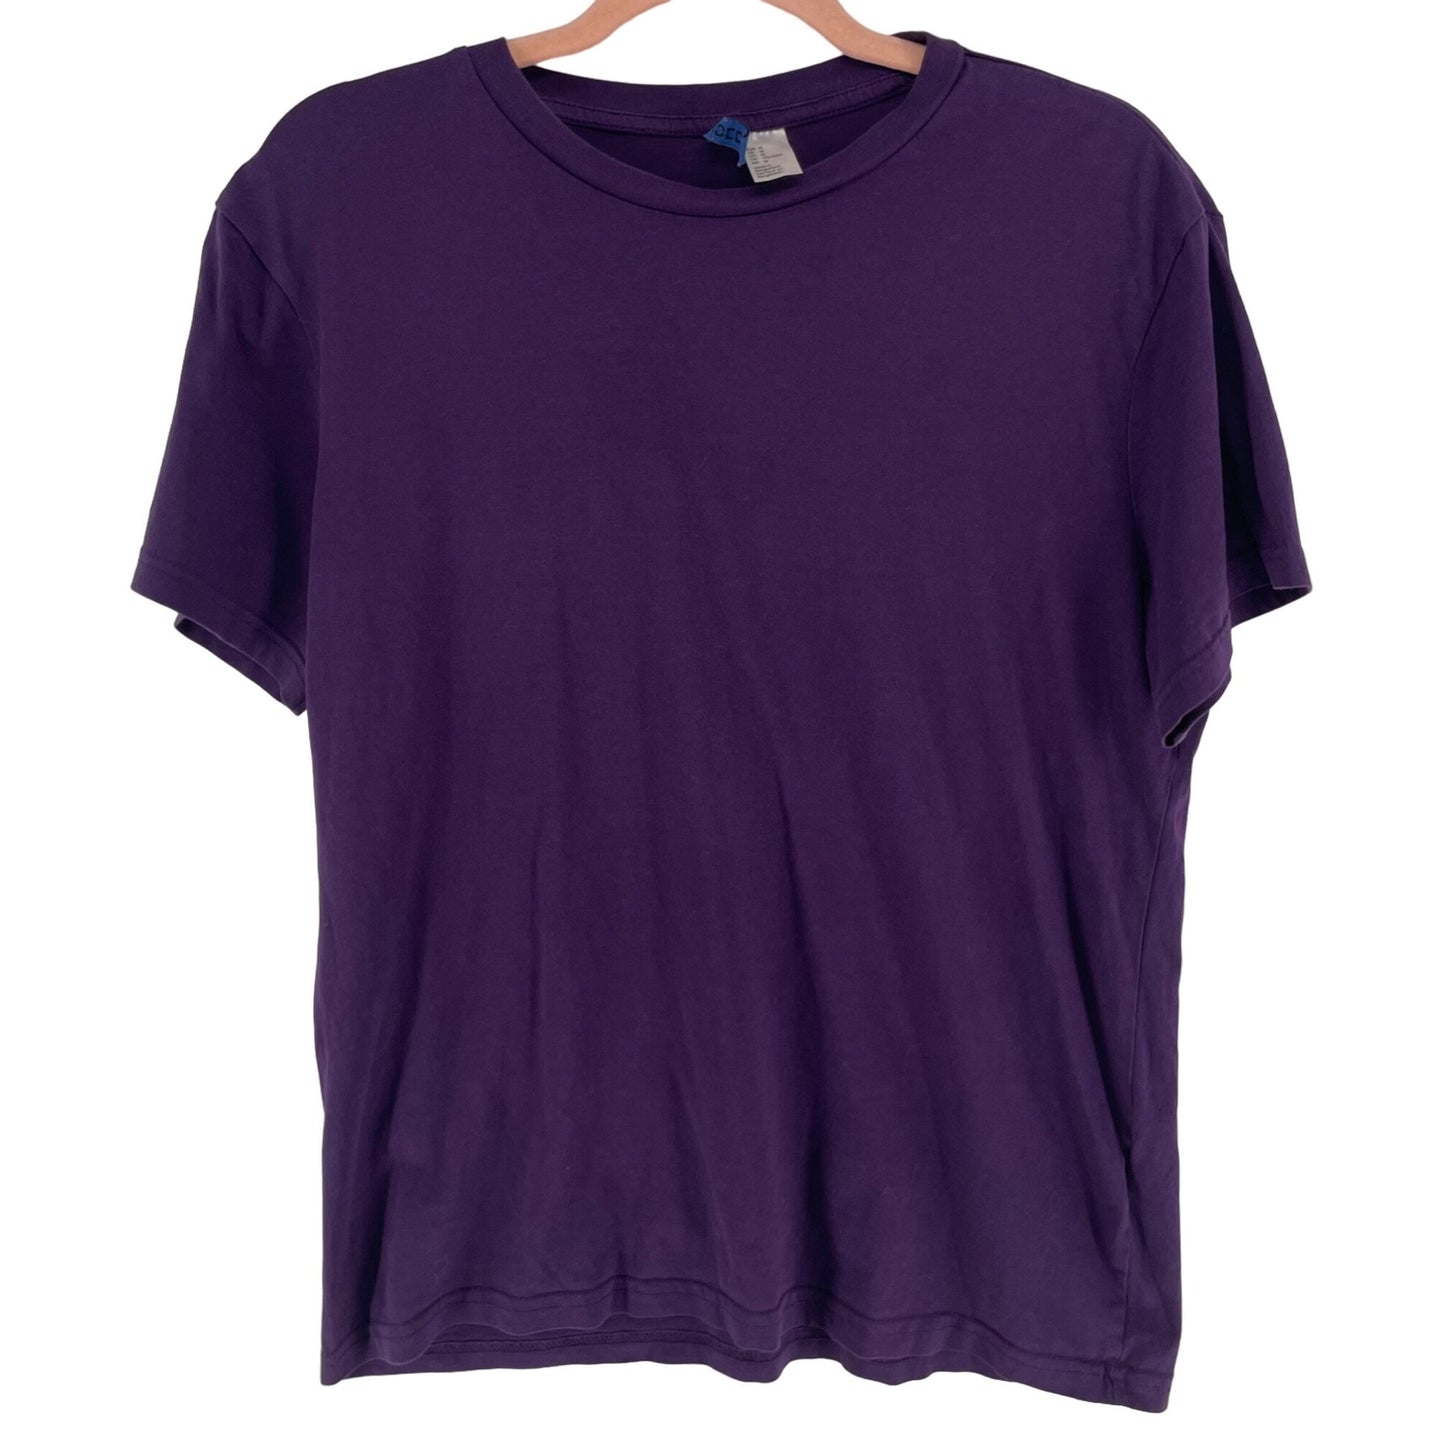 H&M Women's Size Medium Dark Purple Crew Neck T-Shirt